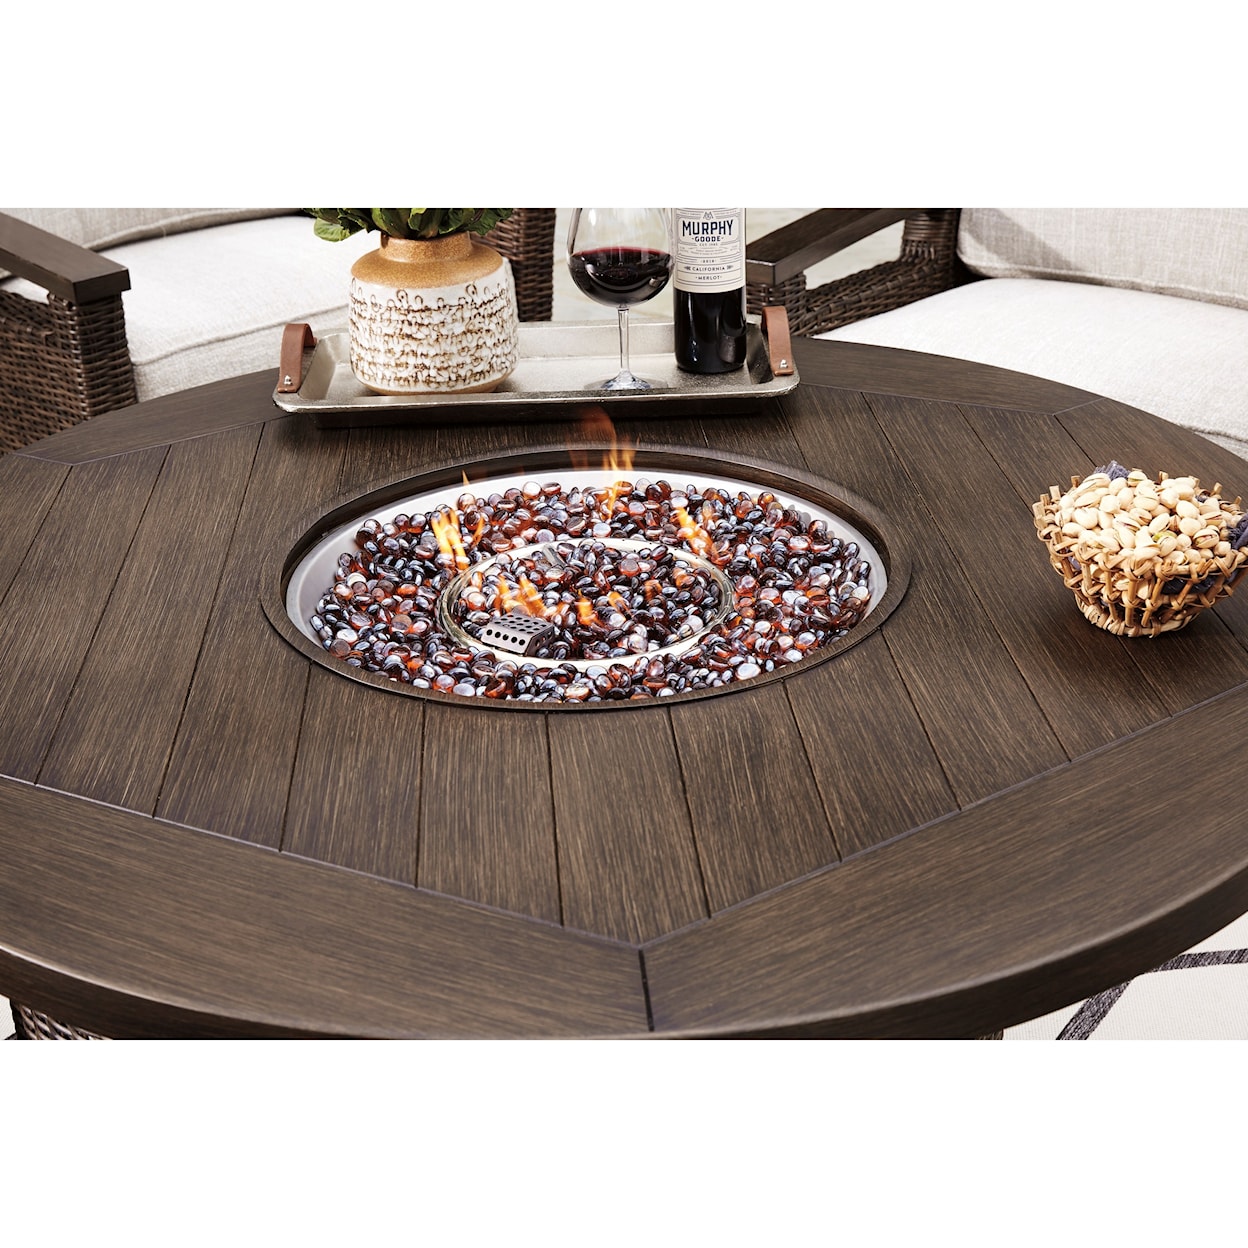 Ashley Furniture Signature Design Paradise Trail Outdoor Fire Pit Table Set